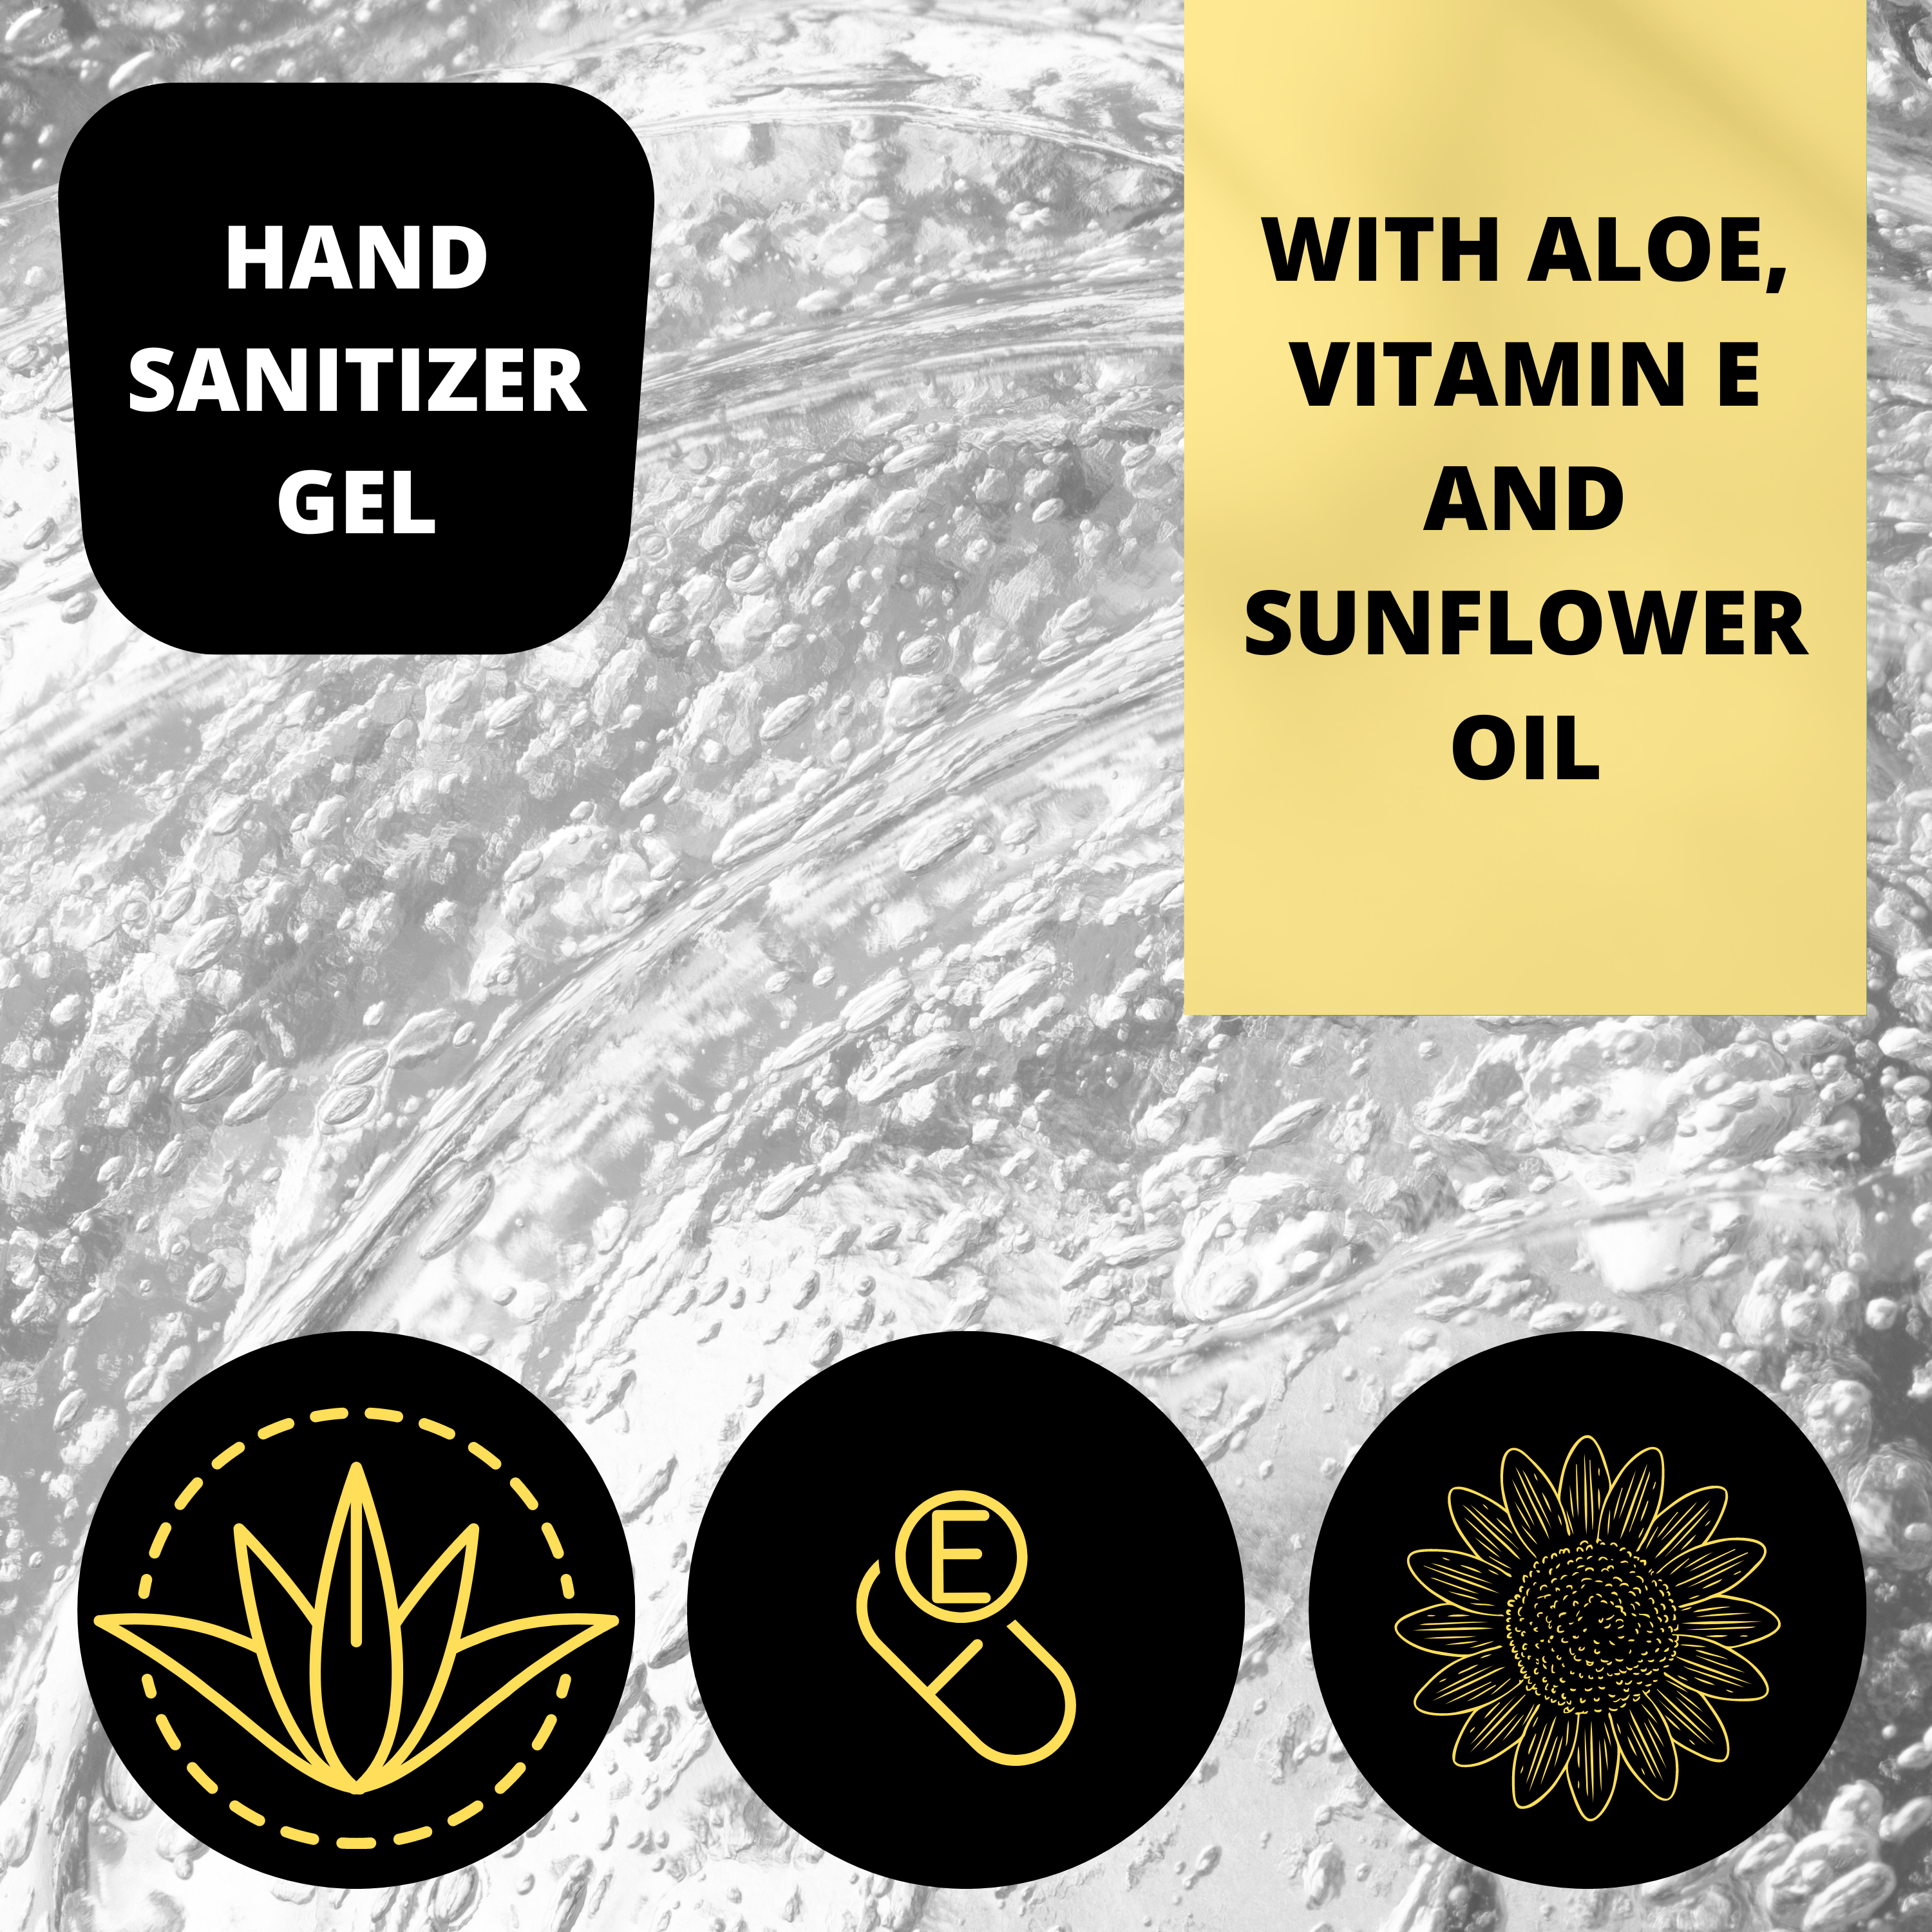 Black Canyon Fig & Coconut Scented Hand Sanitizer Gel